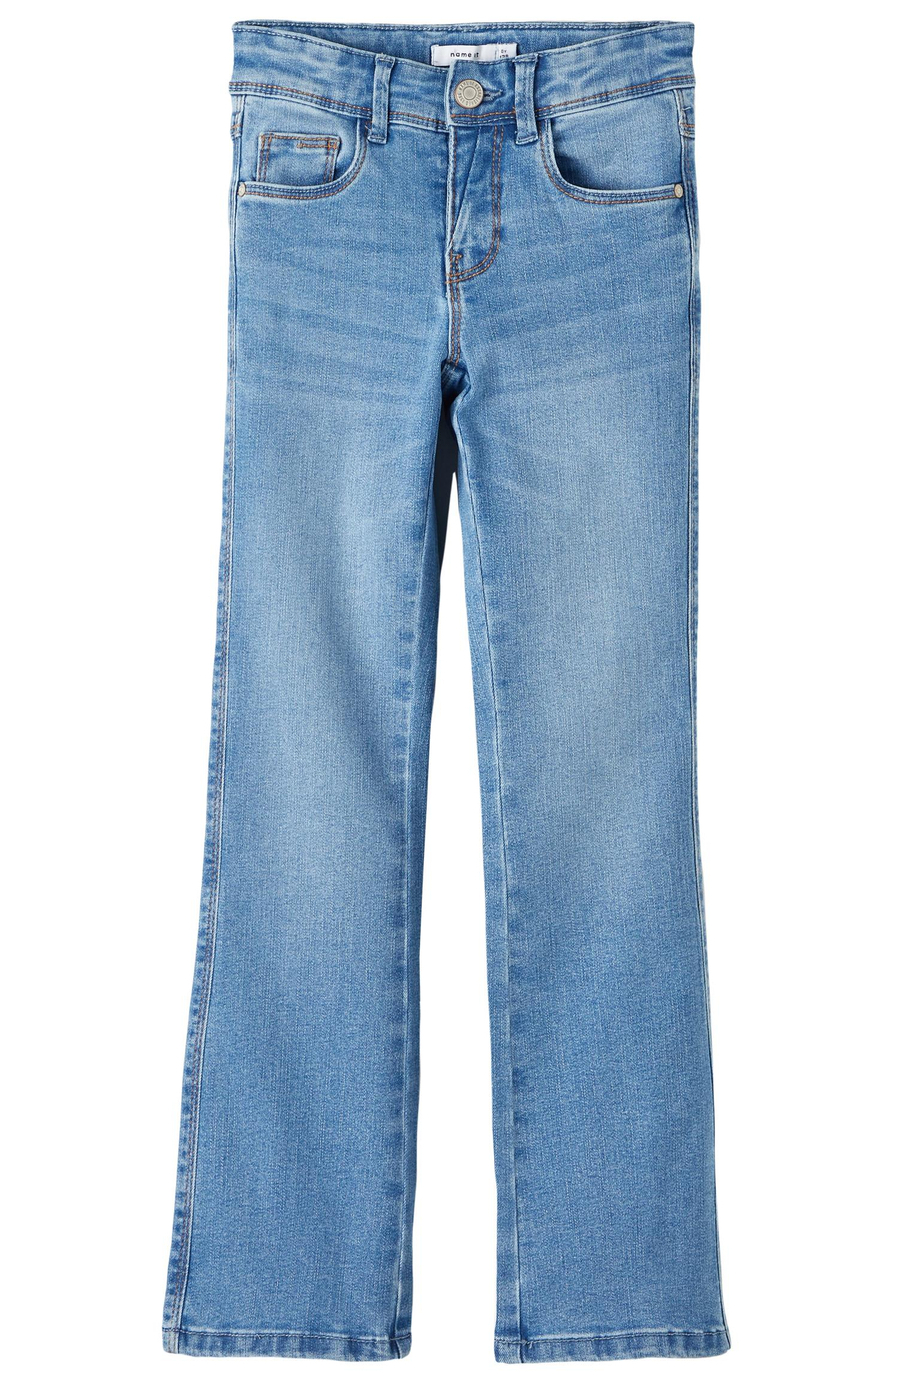 denim boot blue it name 1142-au jeans jeans 13208876 medium skinny nkfpolly